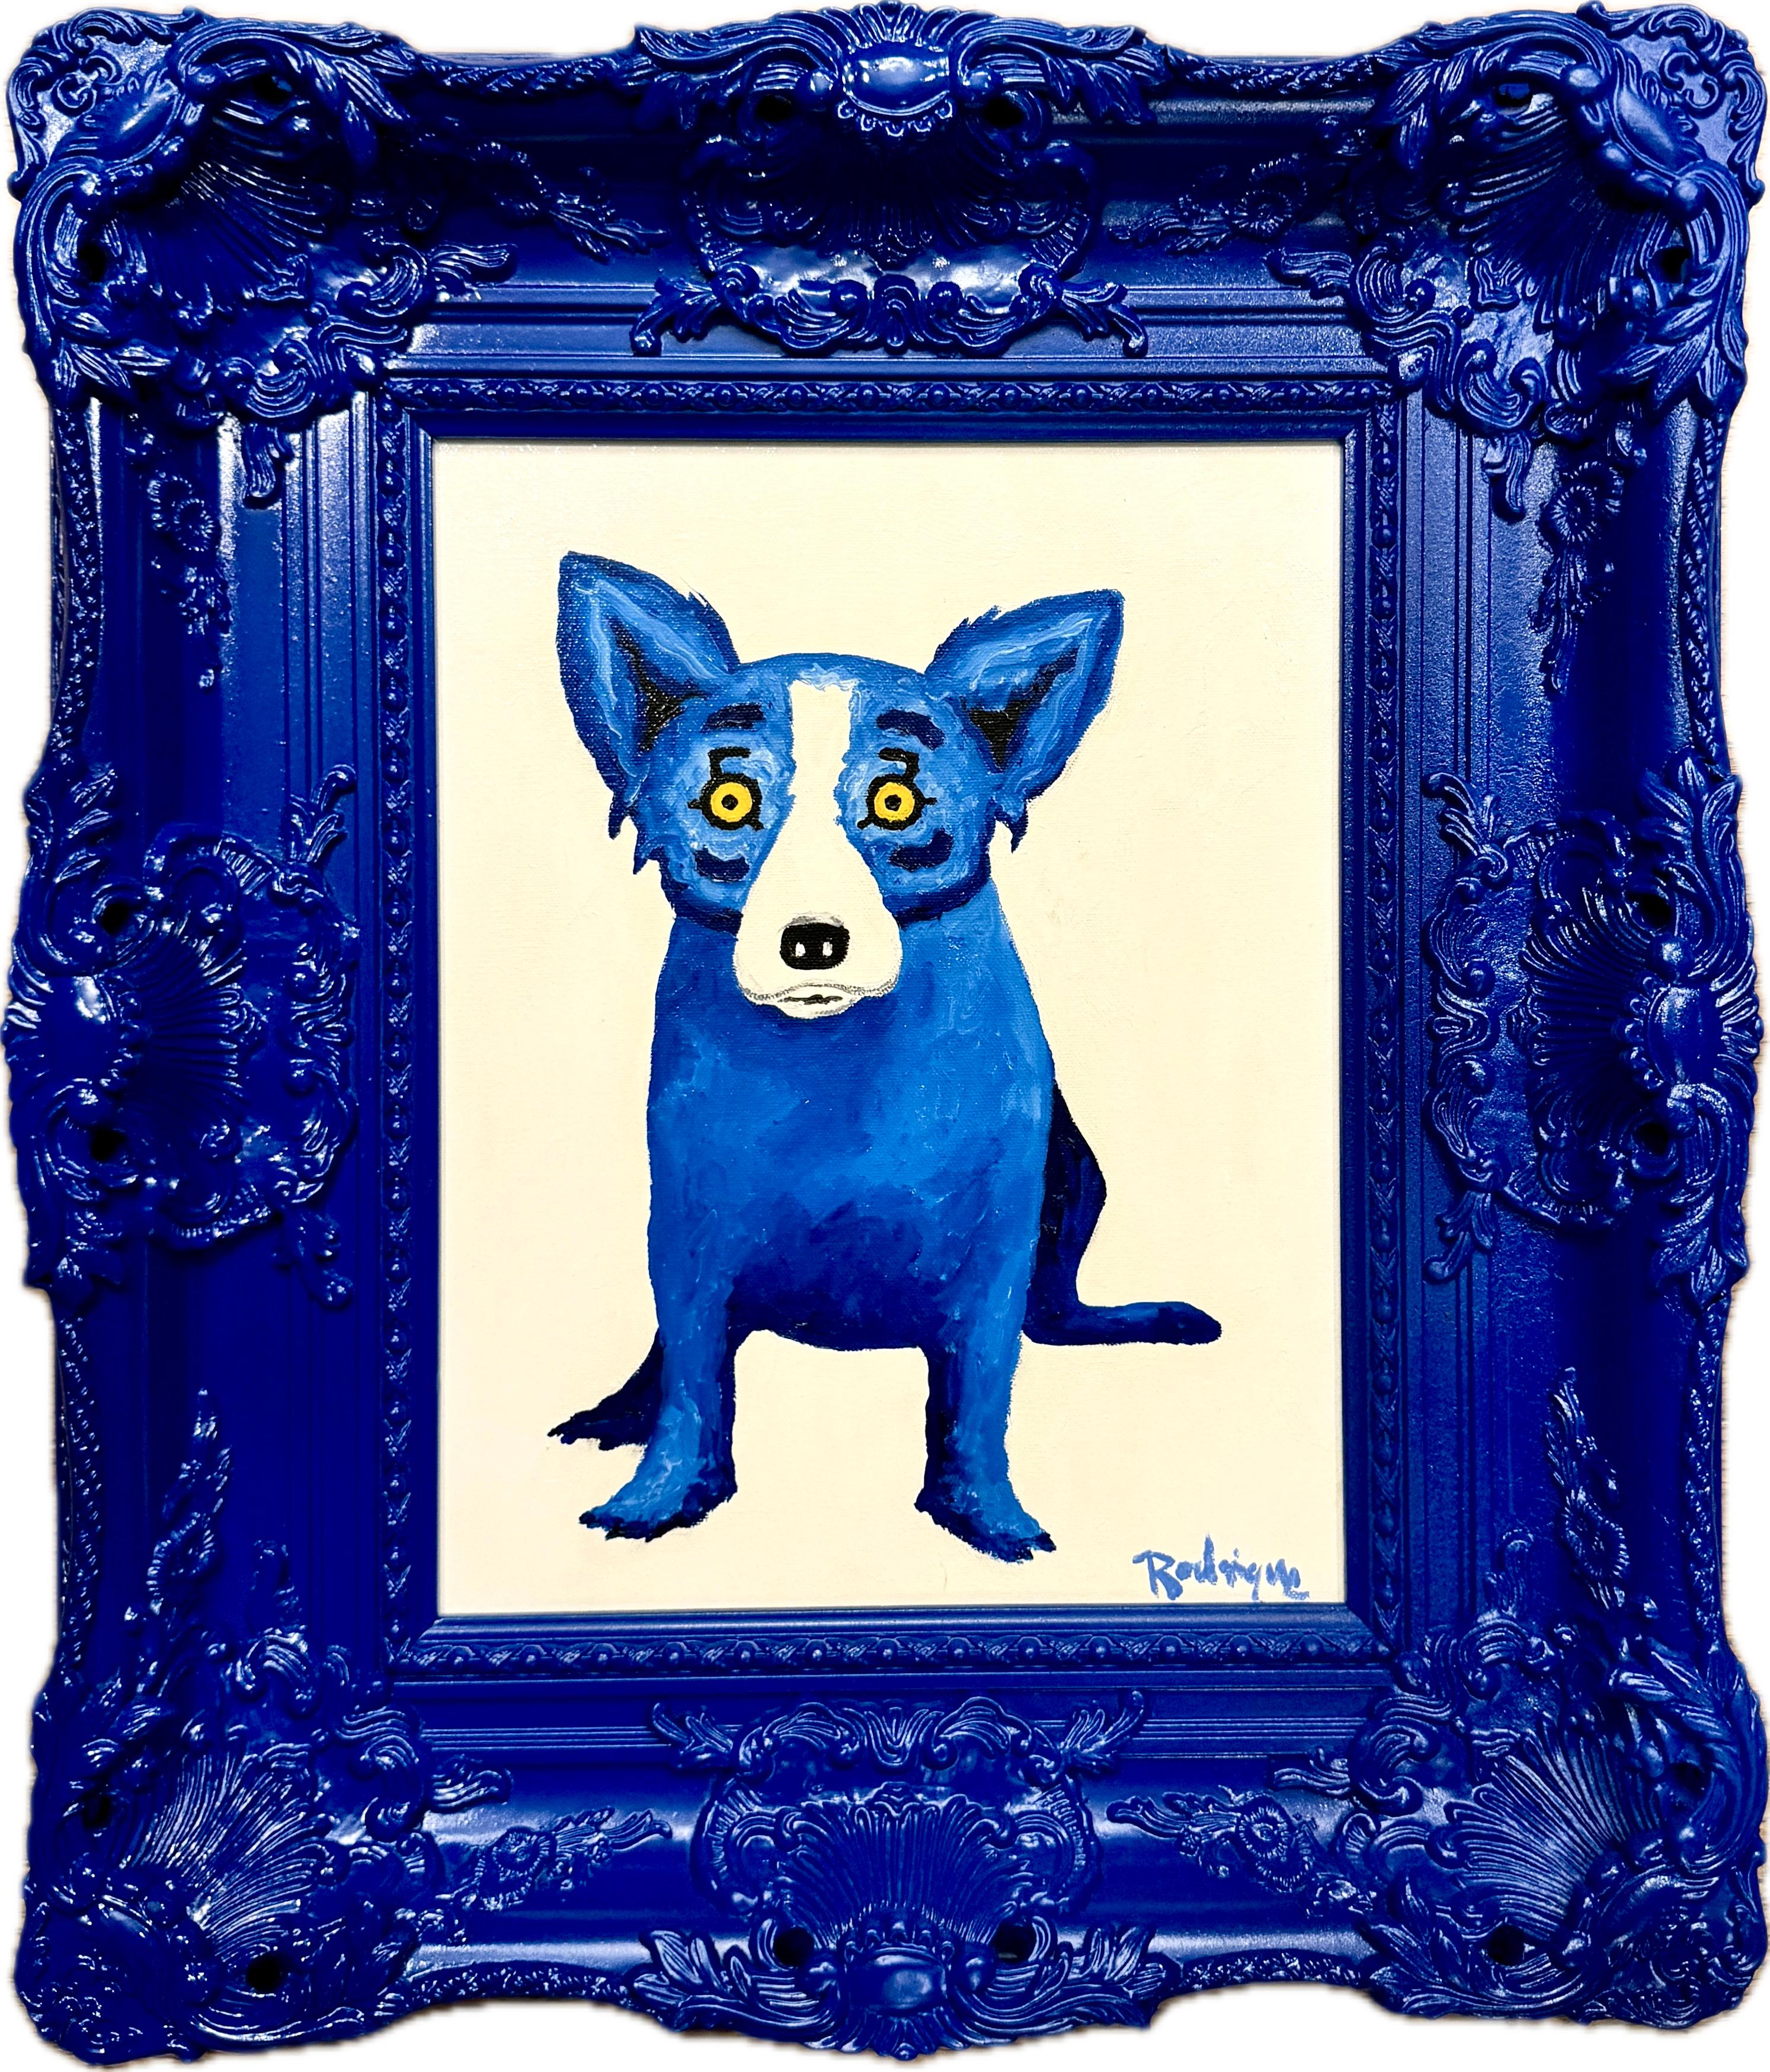 George Rodrigue Animal Painting - Blue Dog